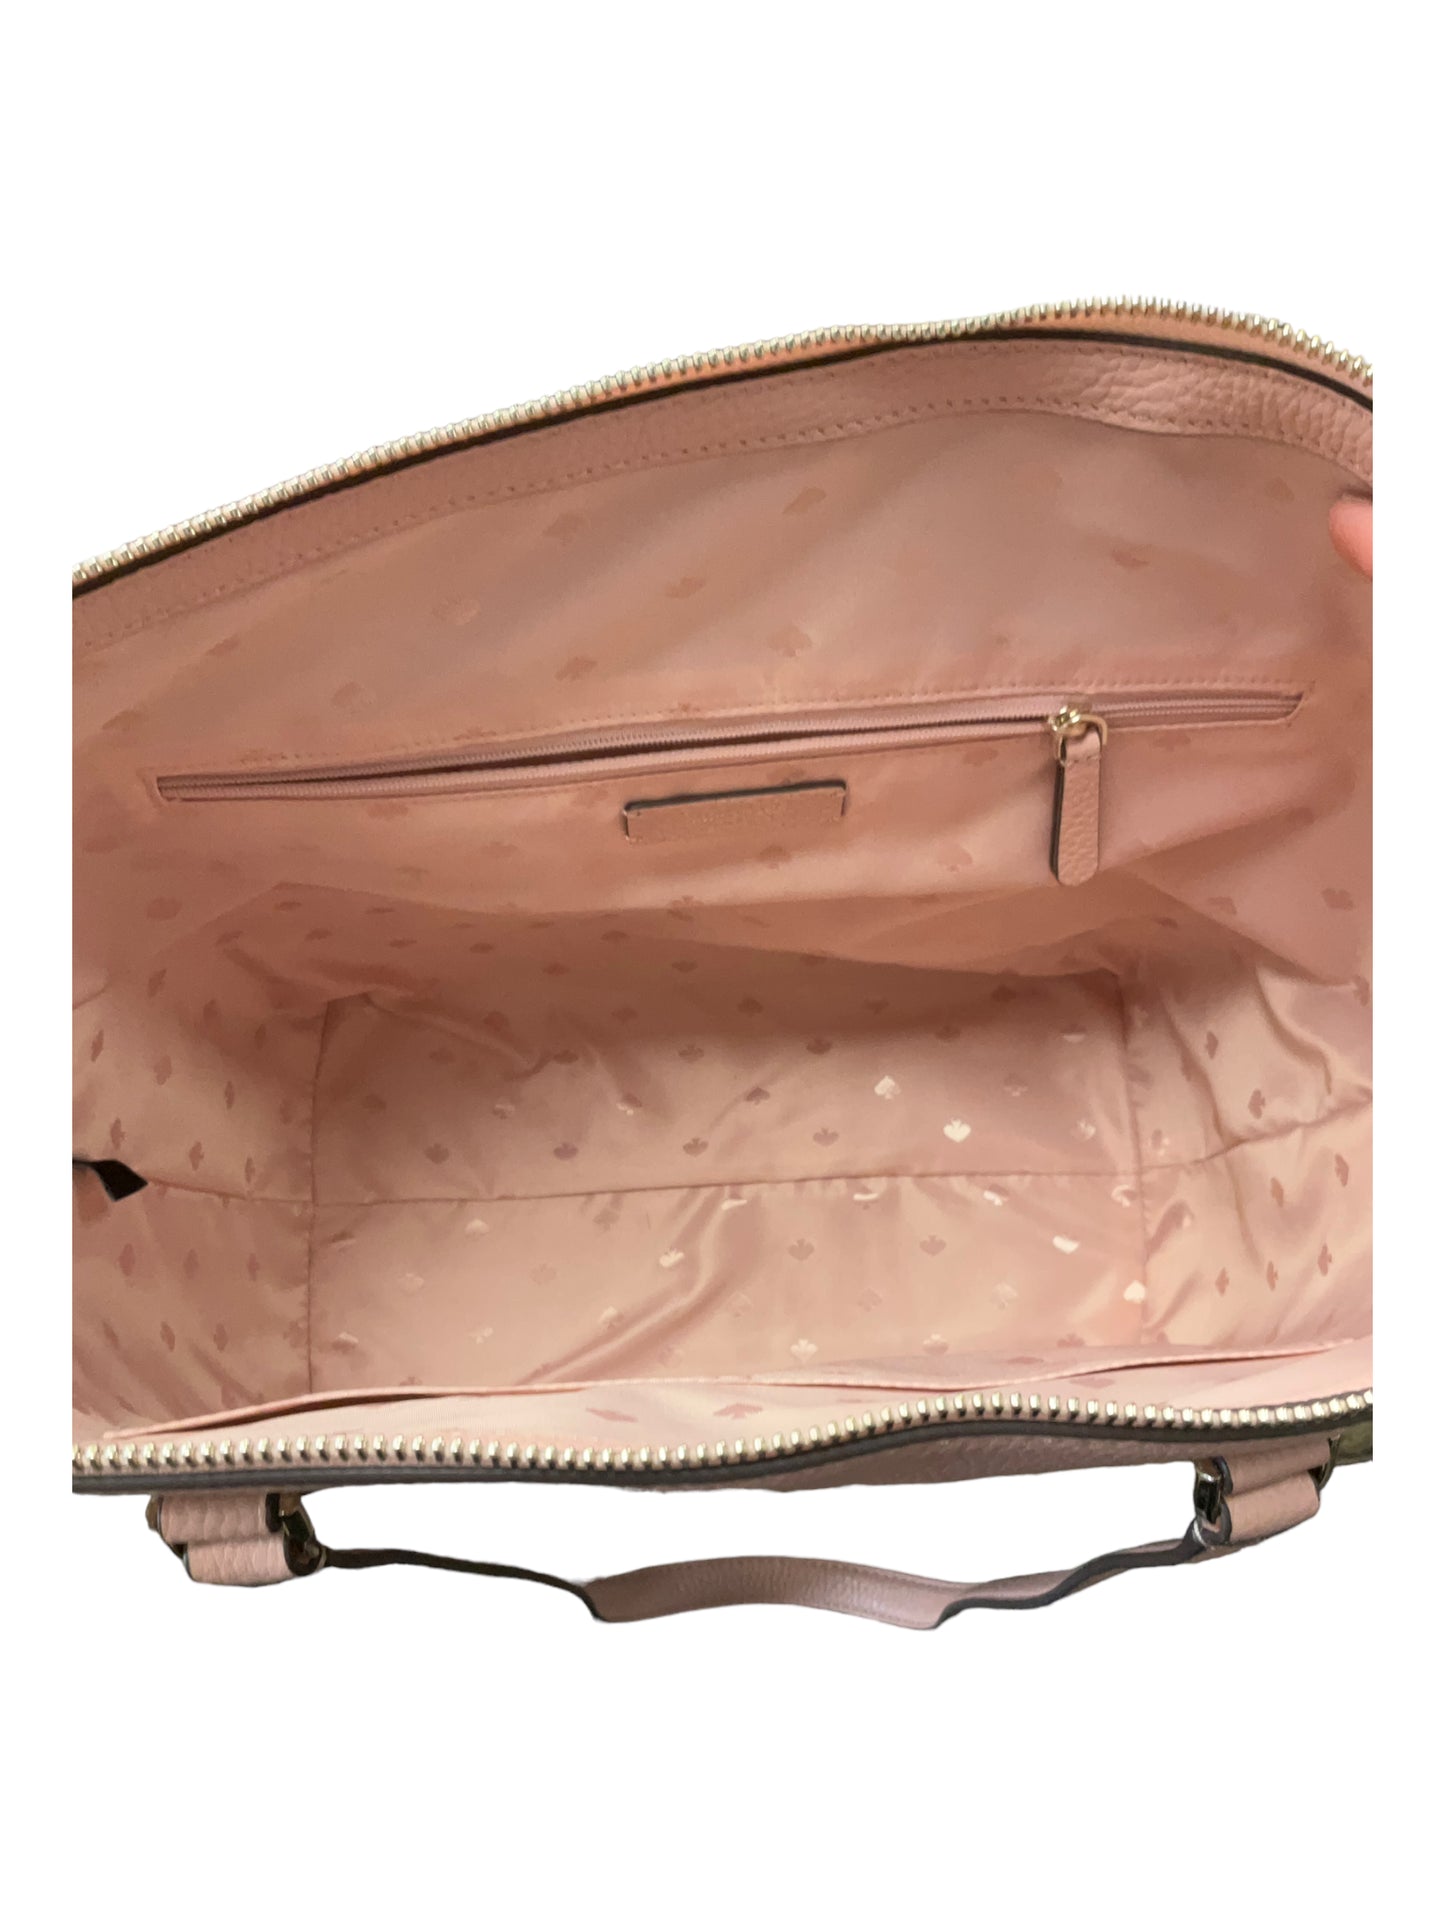 Handbag Leather By Kate Spade  Size: Large